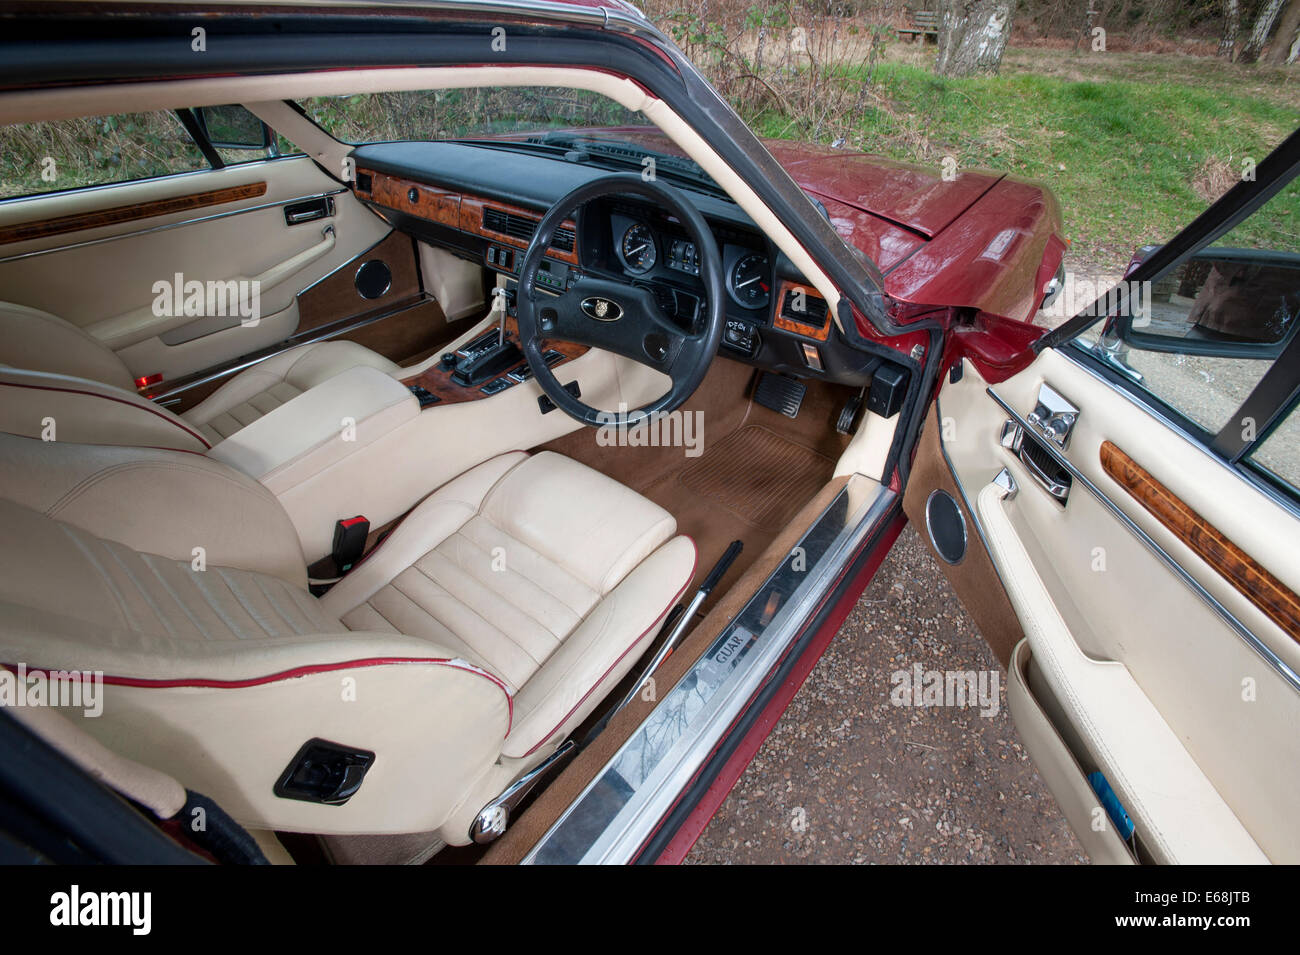 Jaguar XJS based Lynx Eventer shooting brake classic car Stock Photo